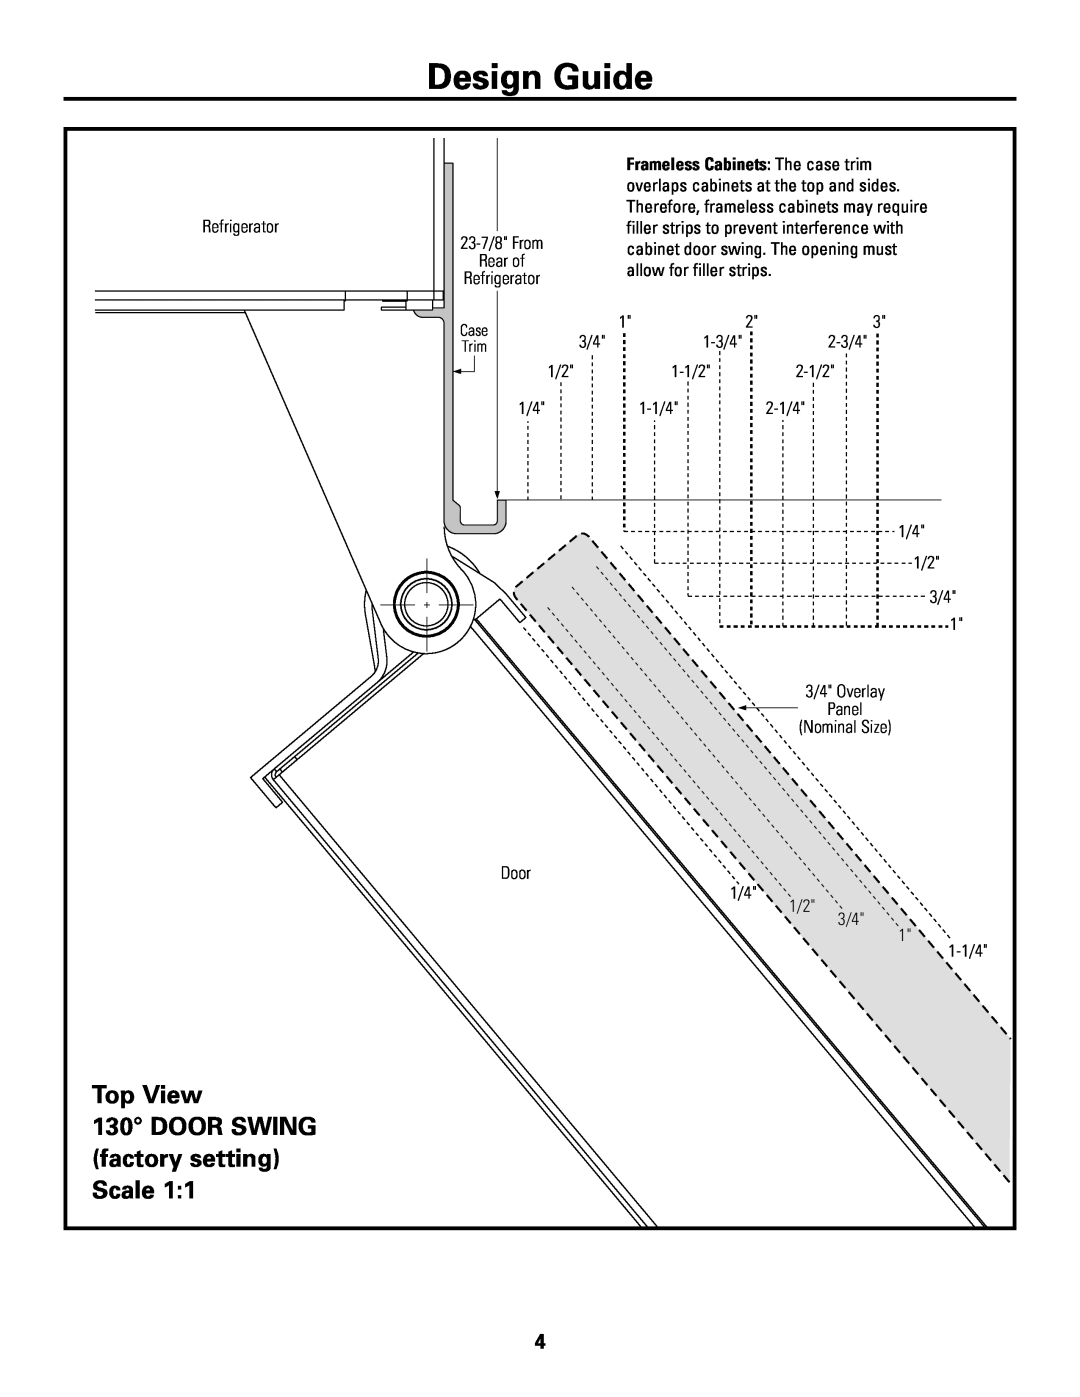 GE Monogram ZICS360 LH installation instructions Top View 130 DOOR SWING factory setting Scale 1:1, Design Guide 